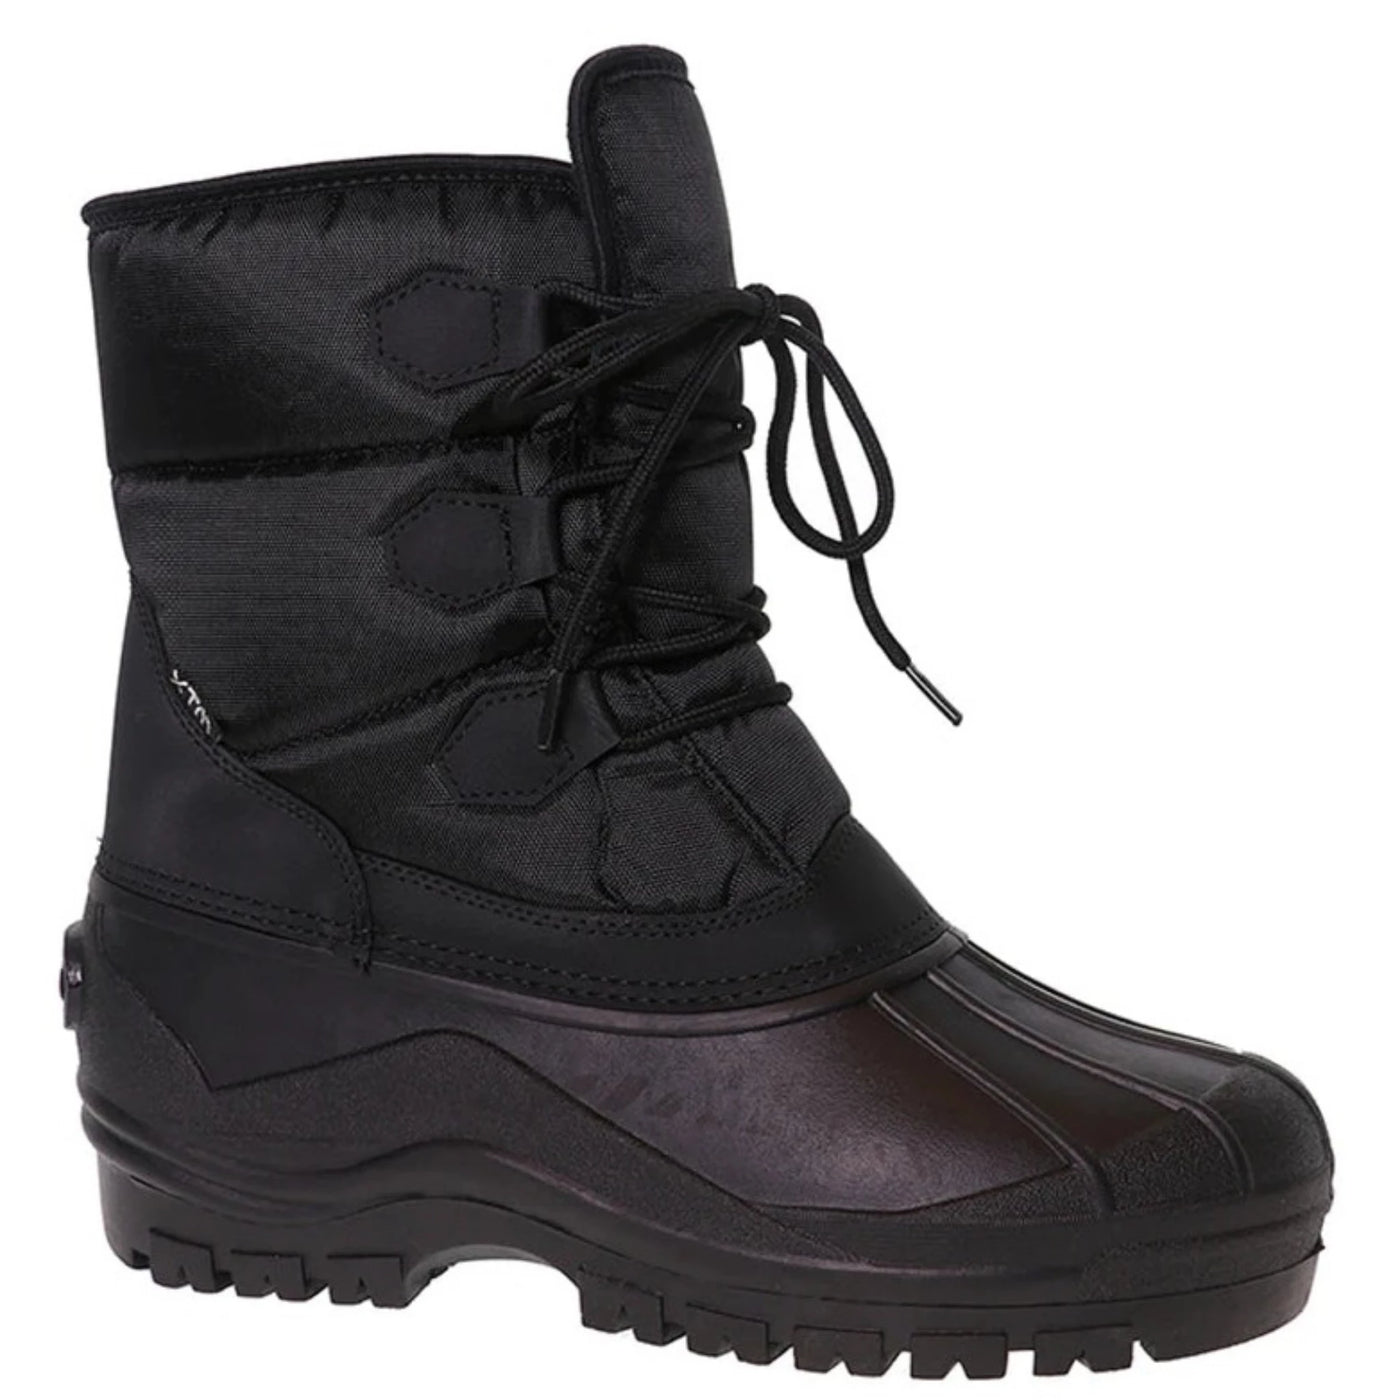 XTM Men's Hunter Snow Boots - Black